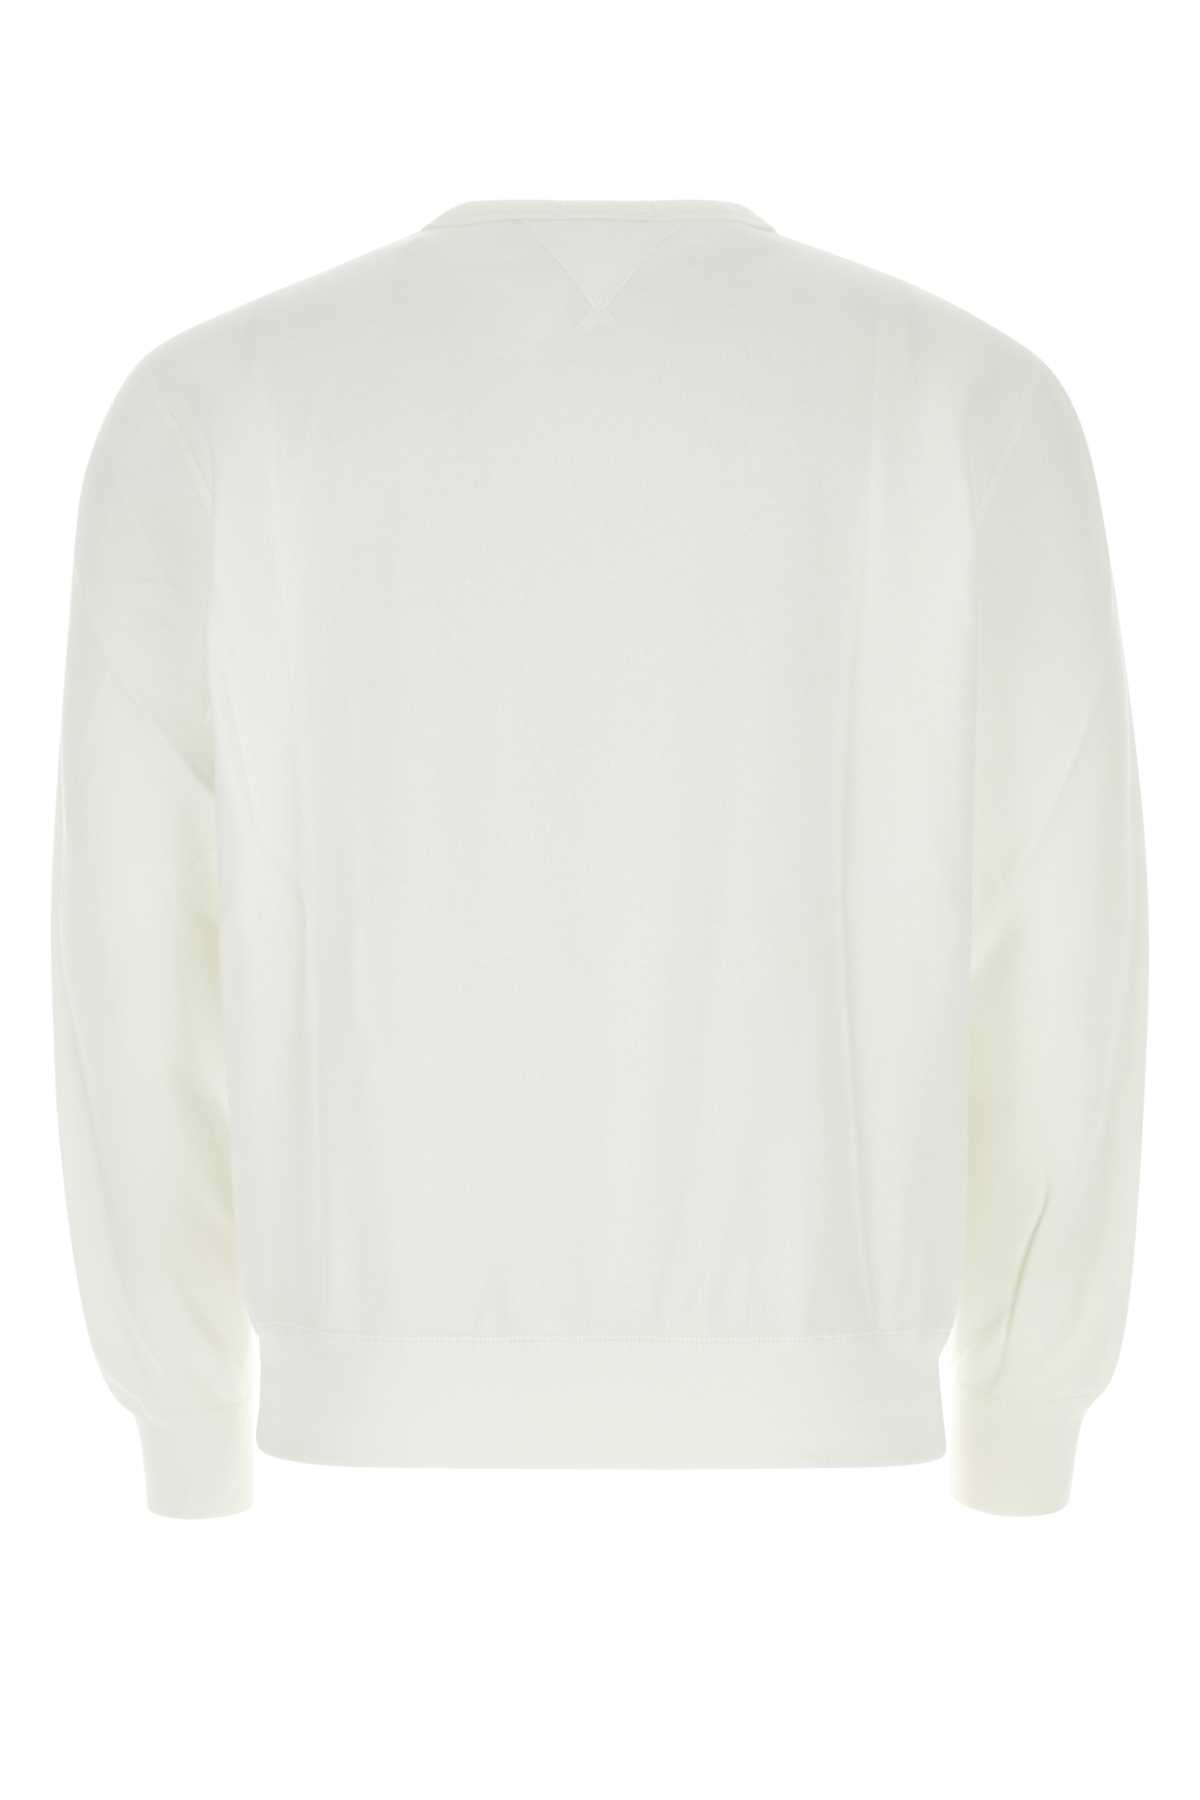 Polo Ralph Lauren White Cotton Blend Oversize Sweatshirt